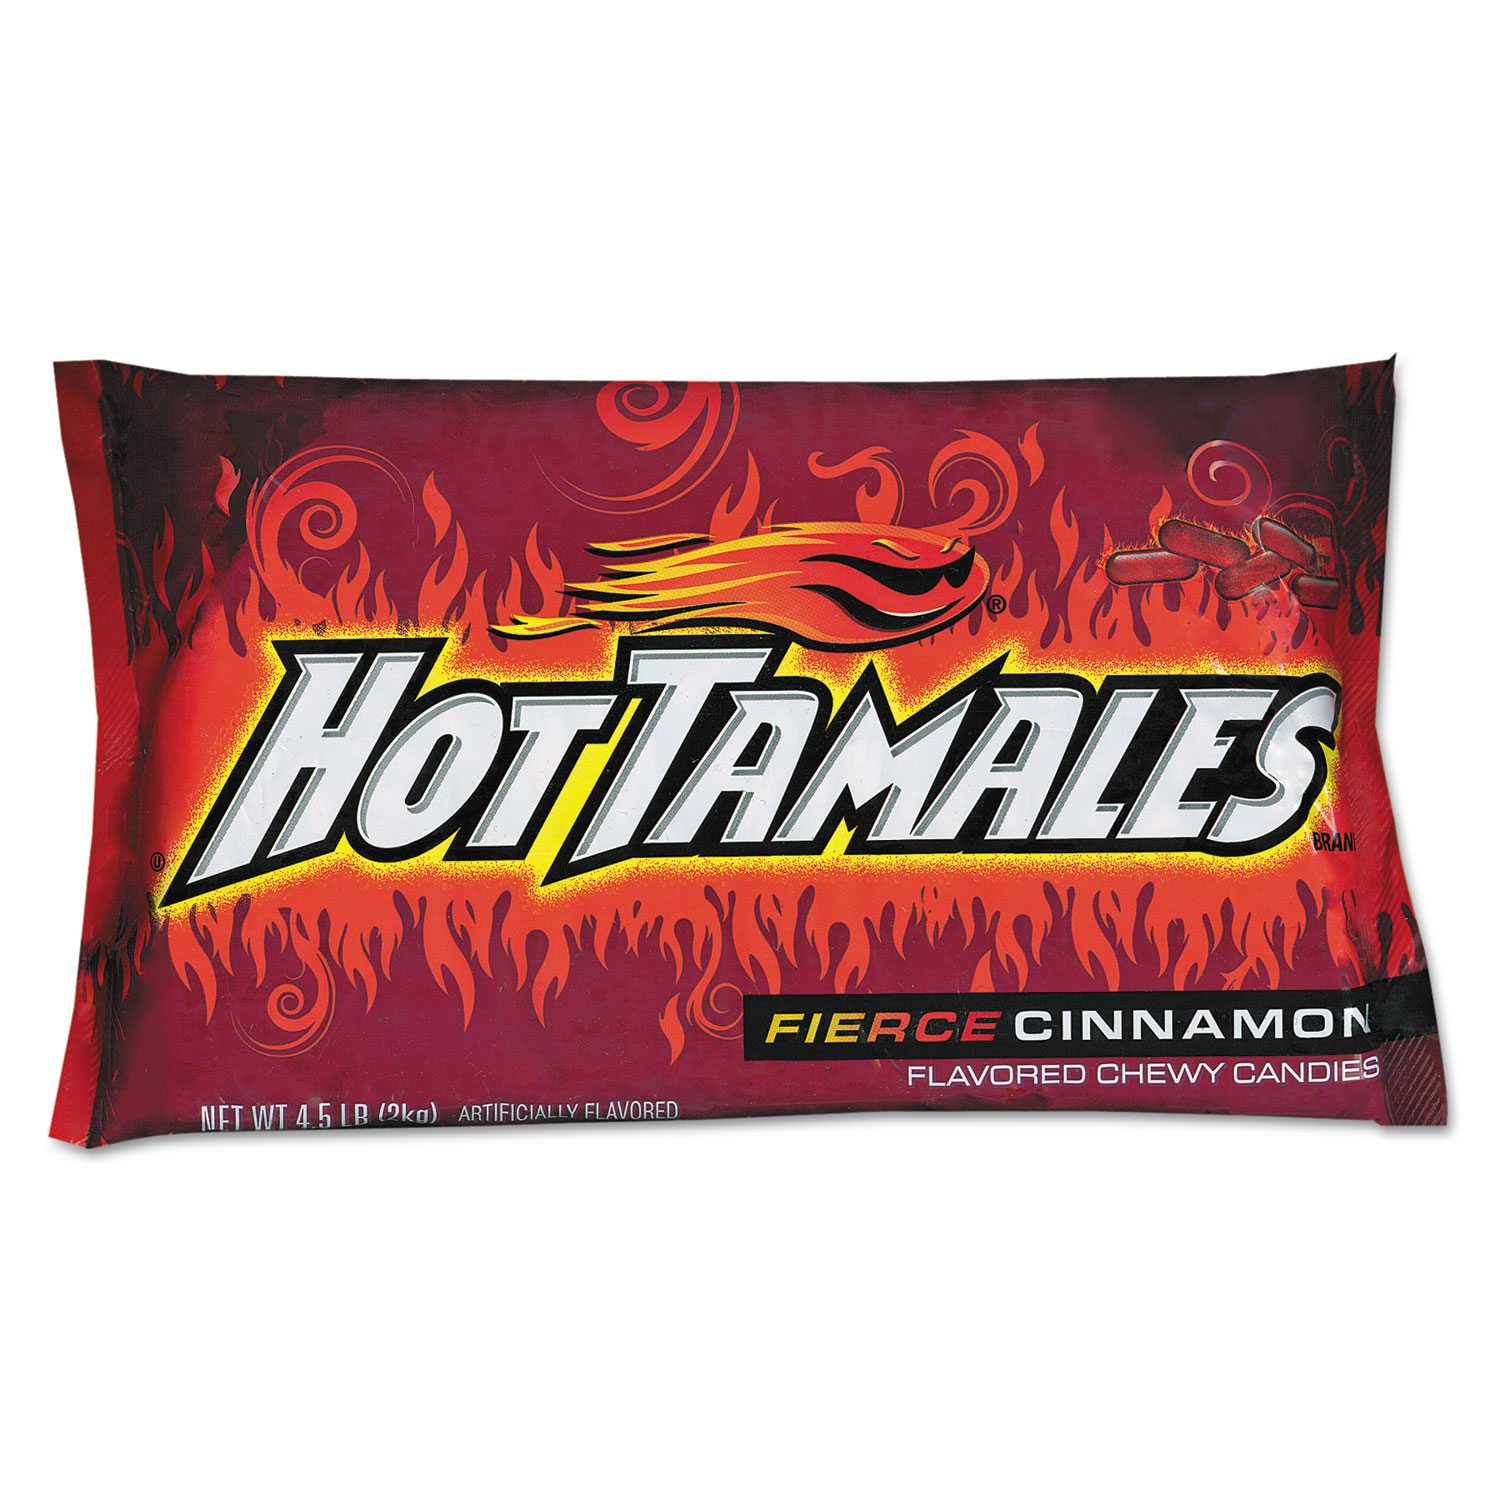  Hot Tamales JUS460989 Cinnamon Candy, 4.5 lbs, Bag (JBI460989) 